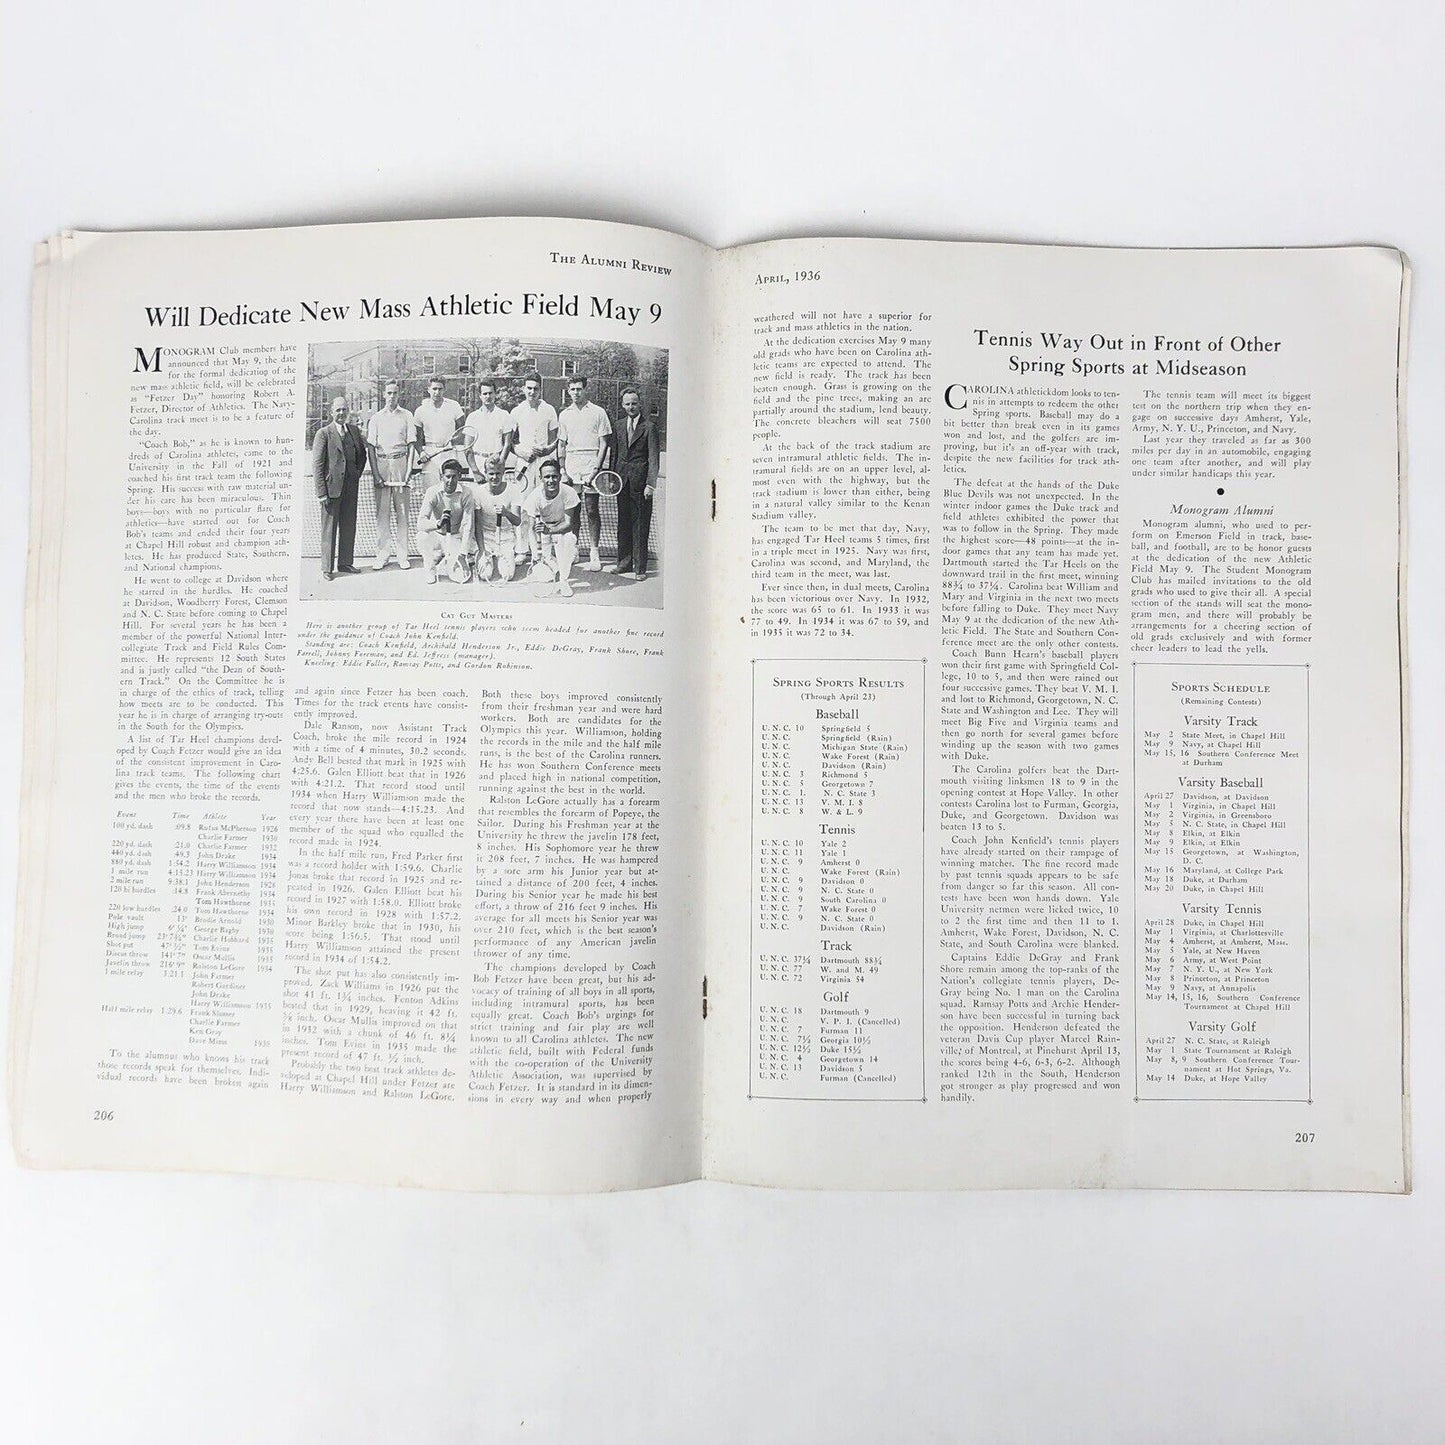 UNC CHAPEL HILL Alumni Review Magazine 1936 University North Carolina Track Meet